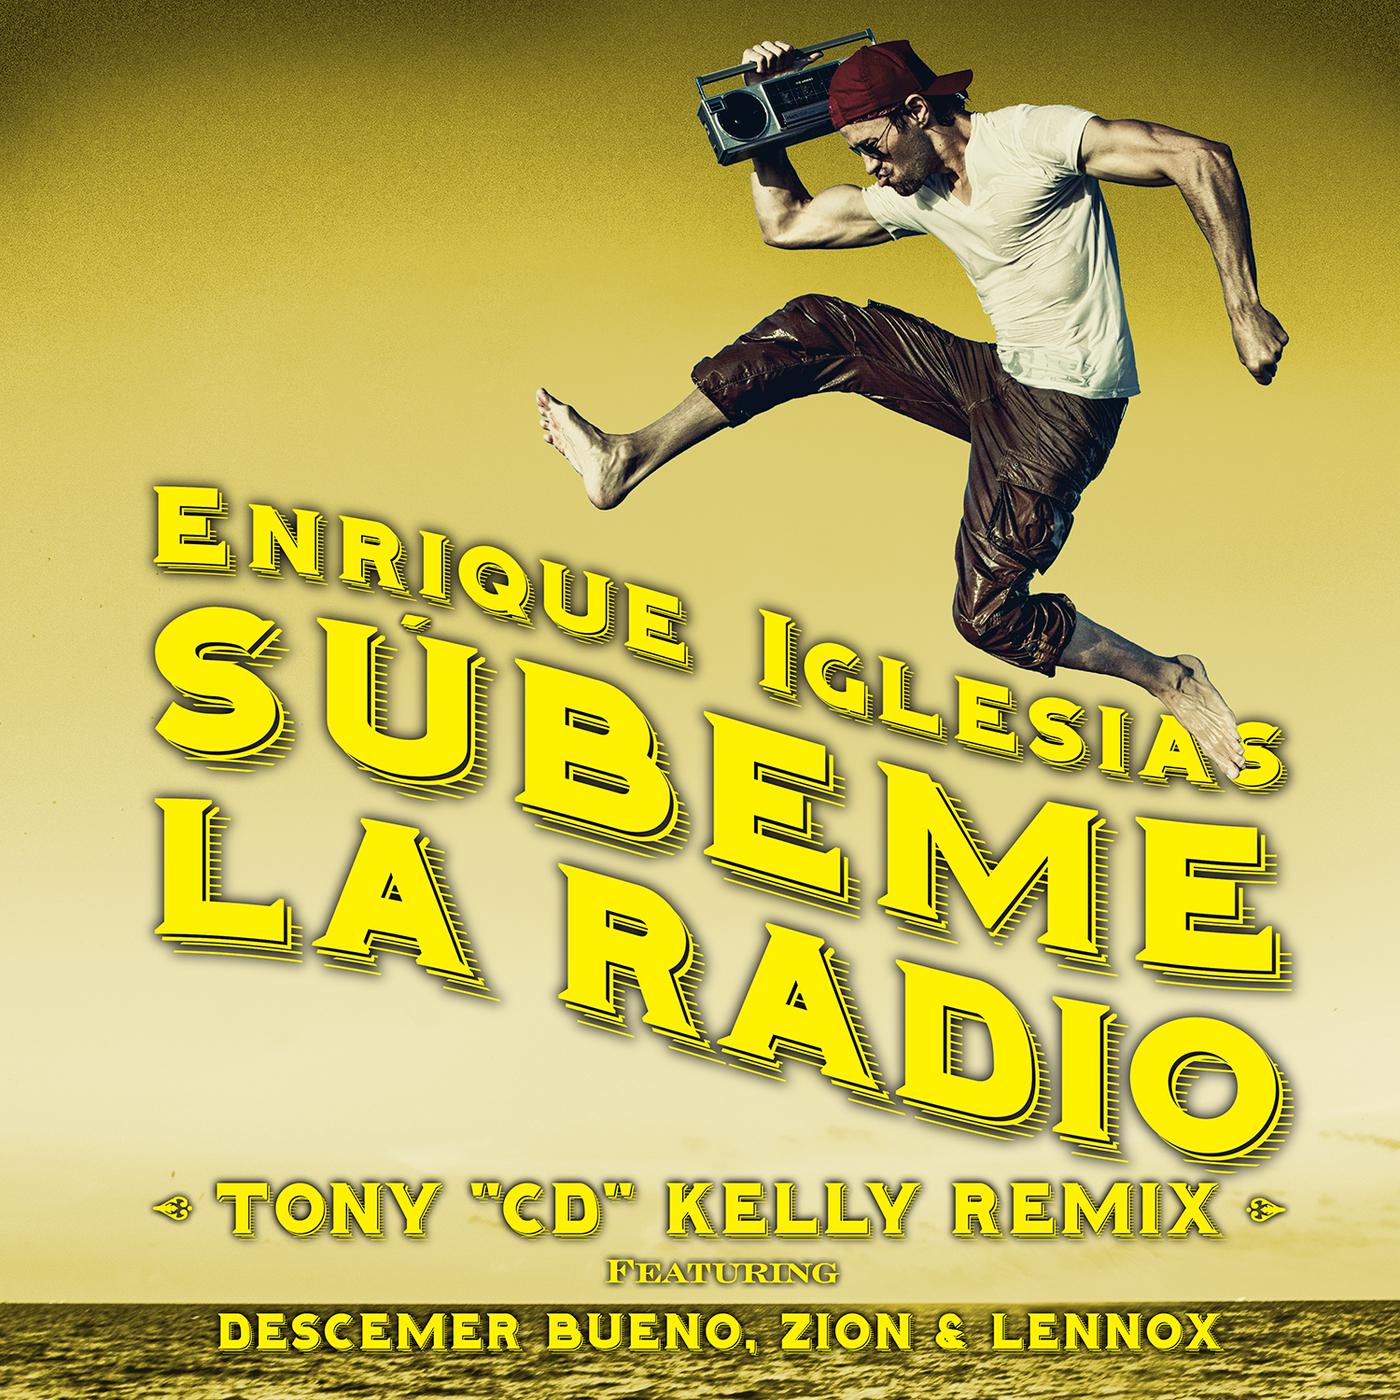 Enrique Iglesias - SUBEME LA RADIO (Tony 